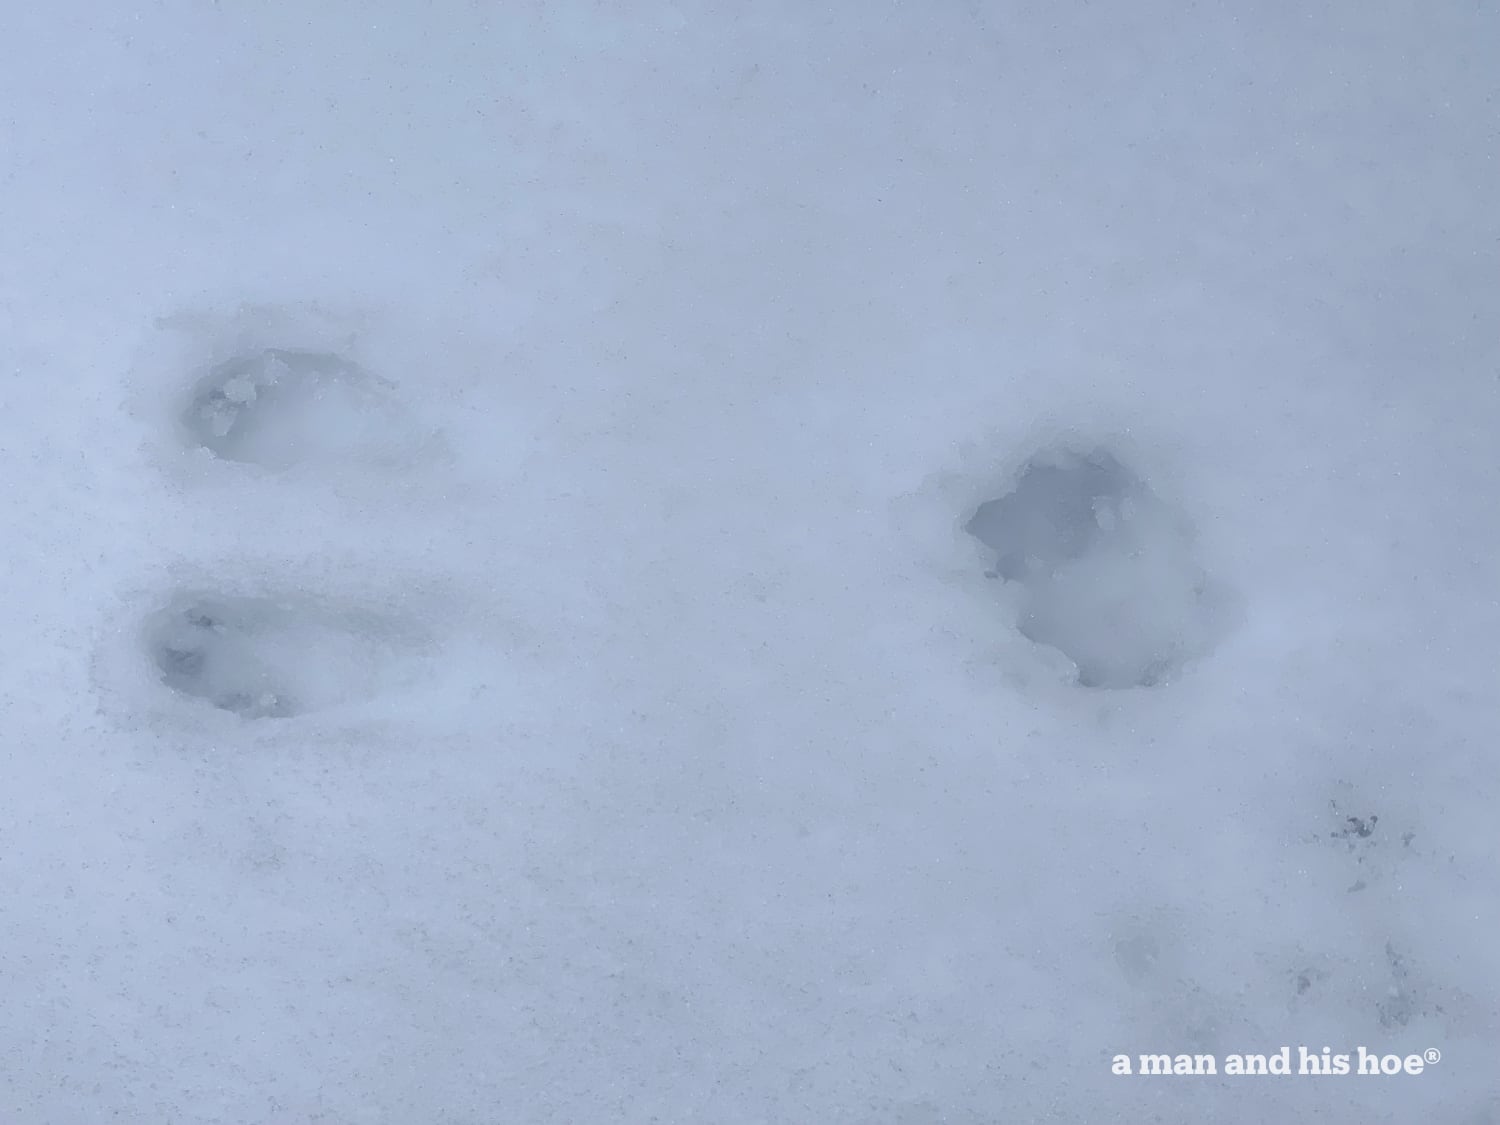 Rabbit footprint in the snow.